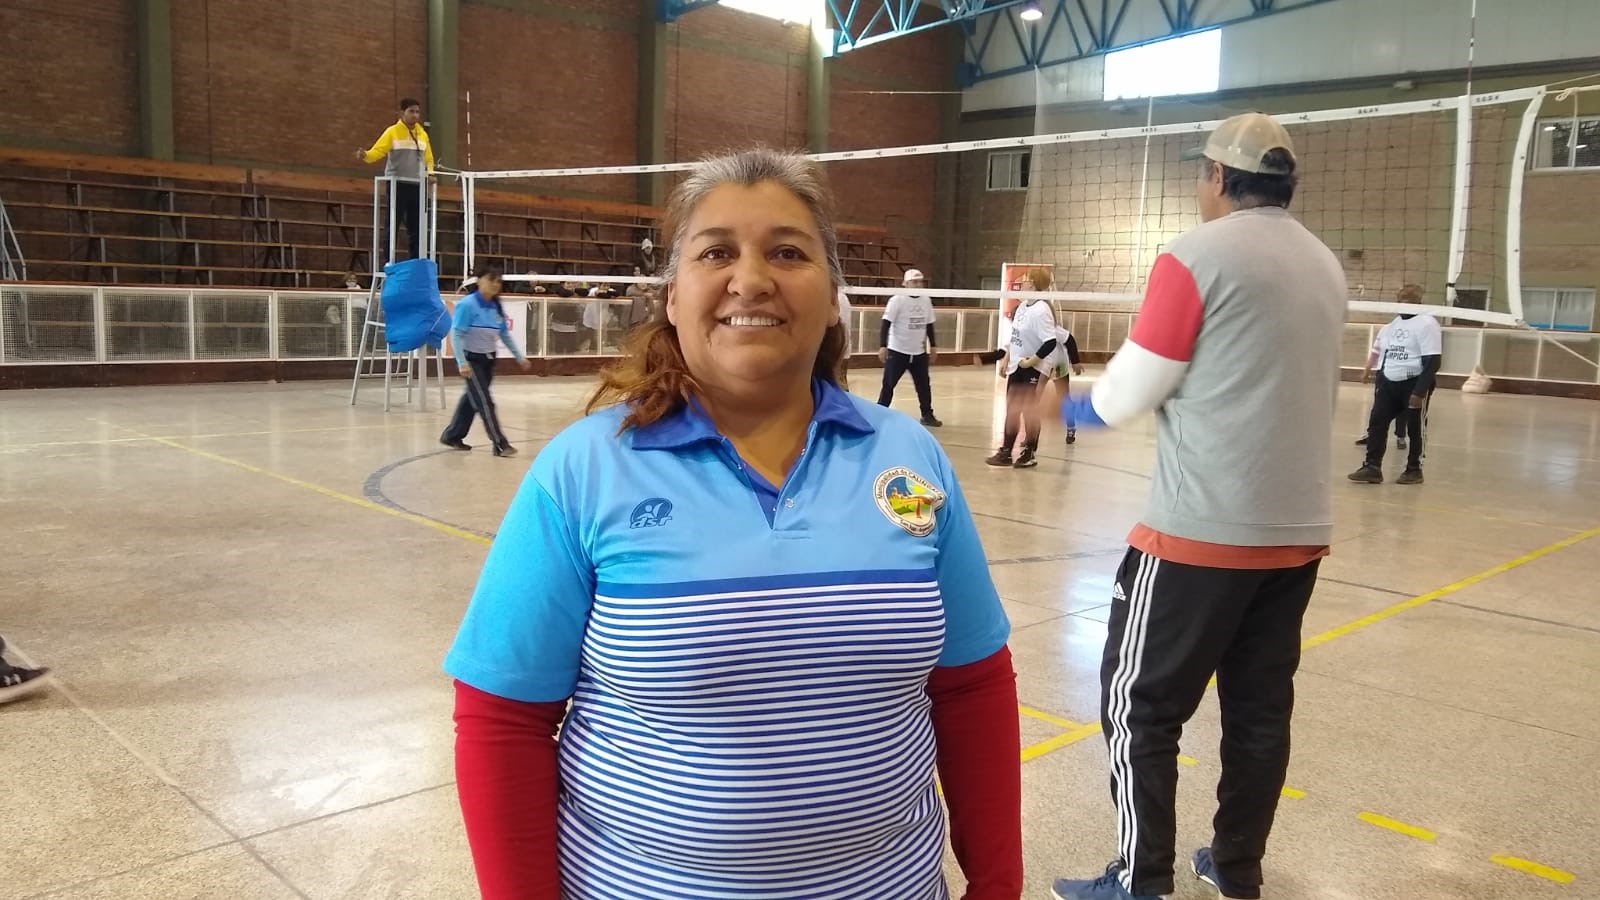 Mónica Valdevenite, de newcom en Barreal: “Nos divertimos haciendo deporte”